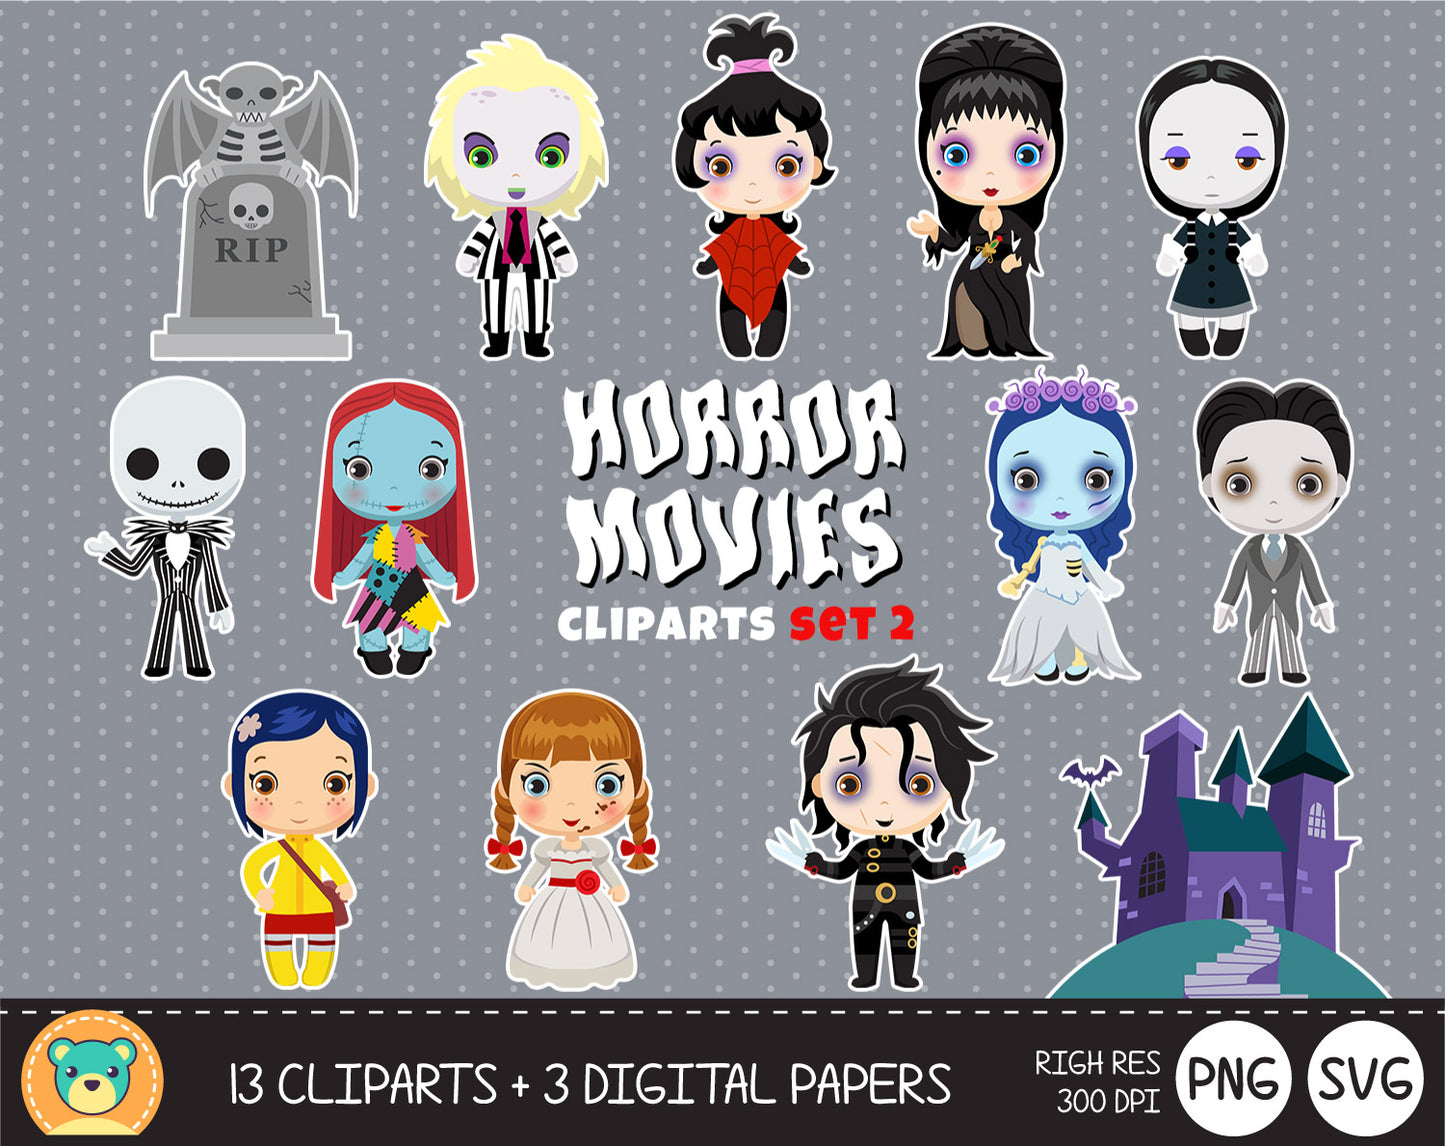 Horror Movies clipart set 2, Digital clip art for decoration, scrapbooking, Halloween cliparts , instant download